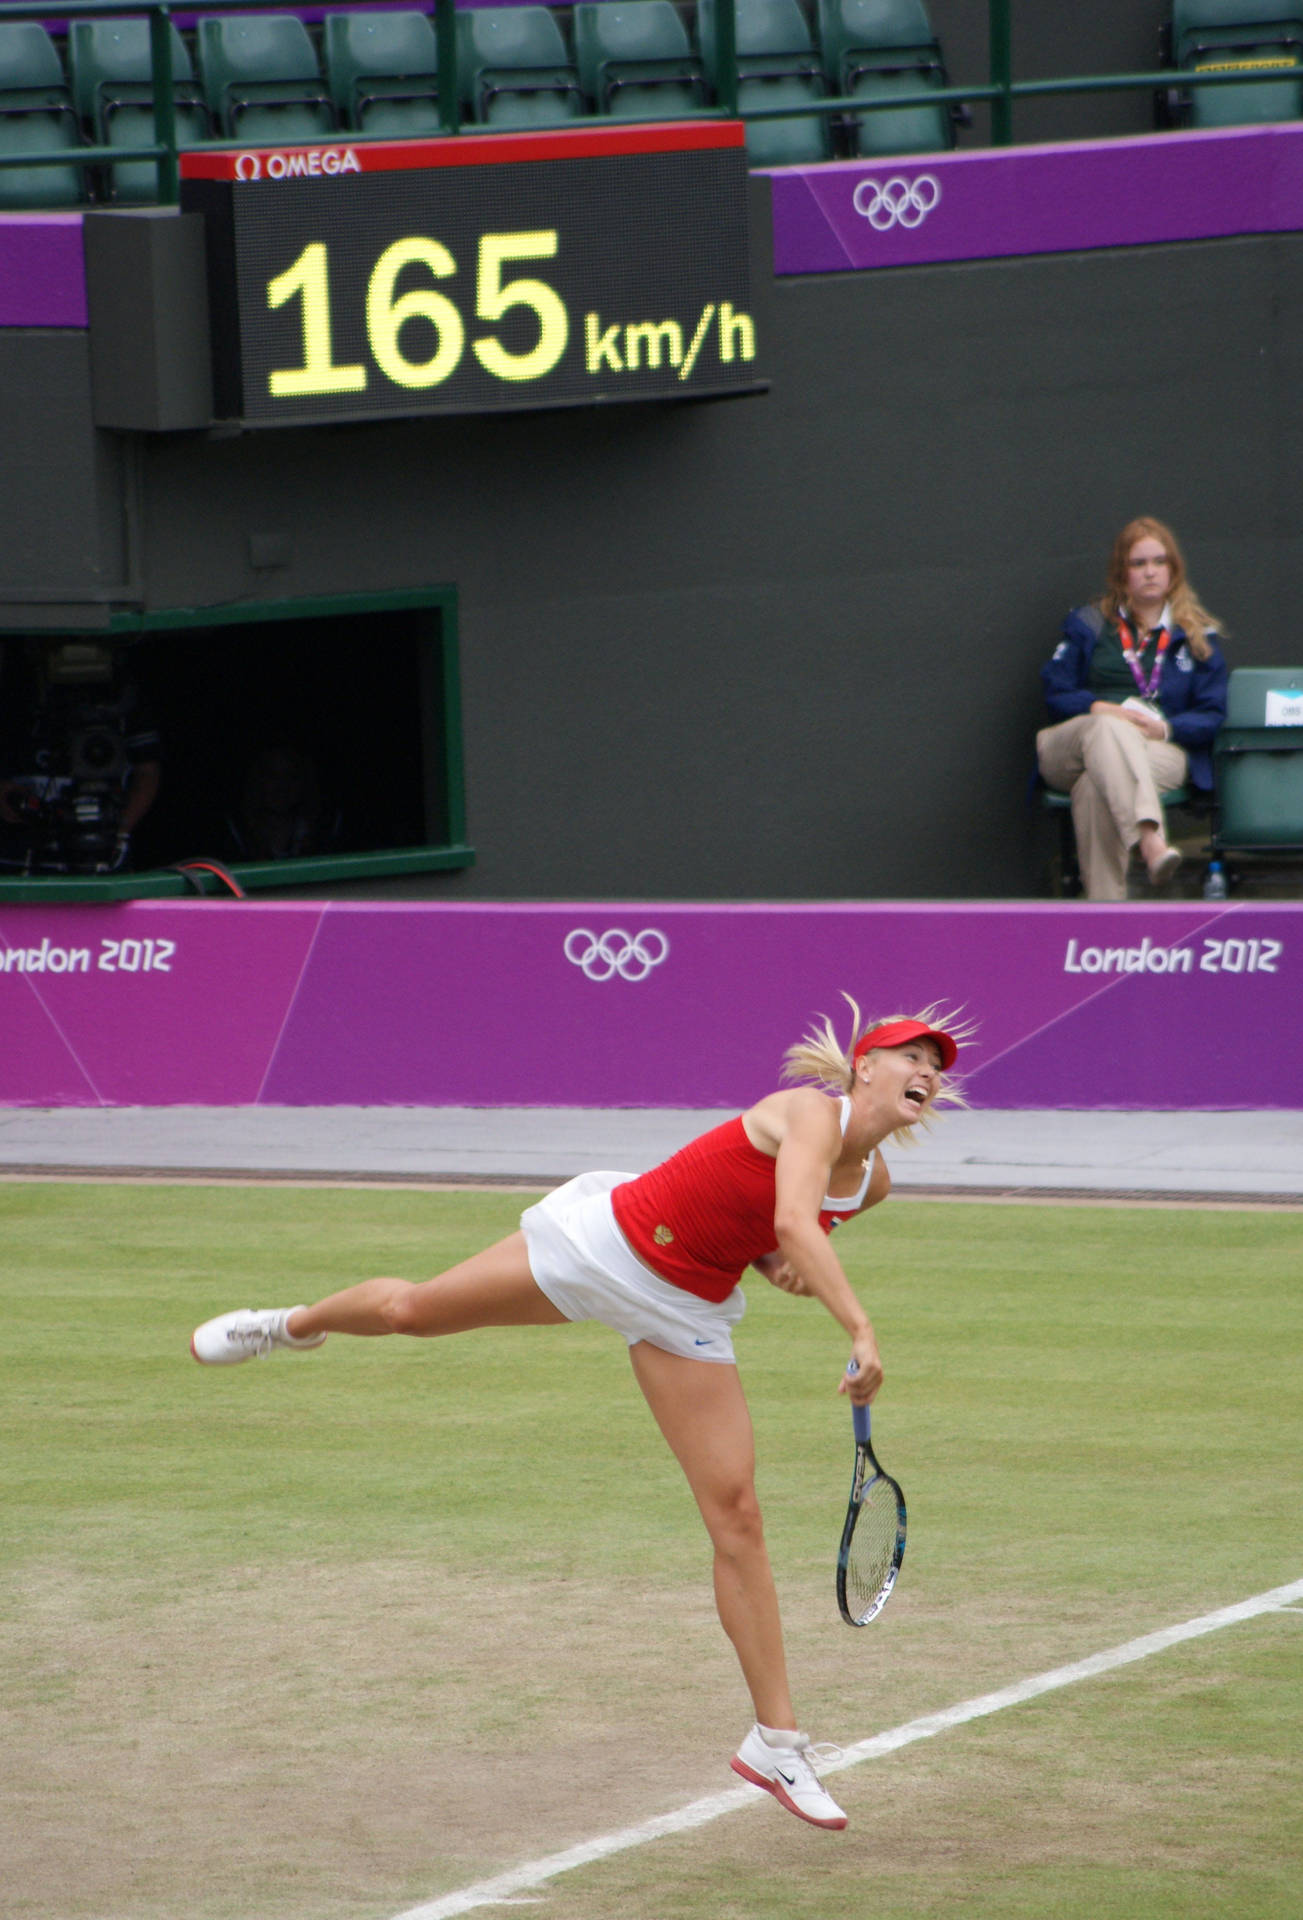 Campeonade Wimbledon Maria Sharapova Fondo de pantalla